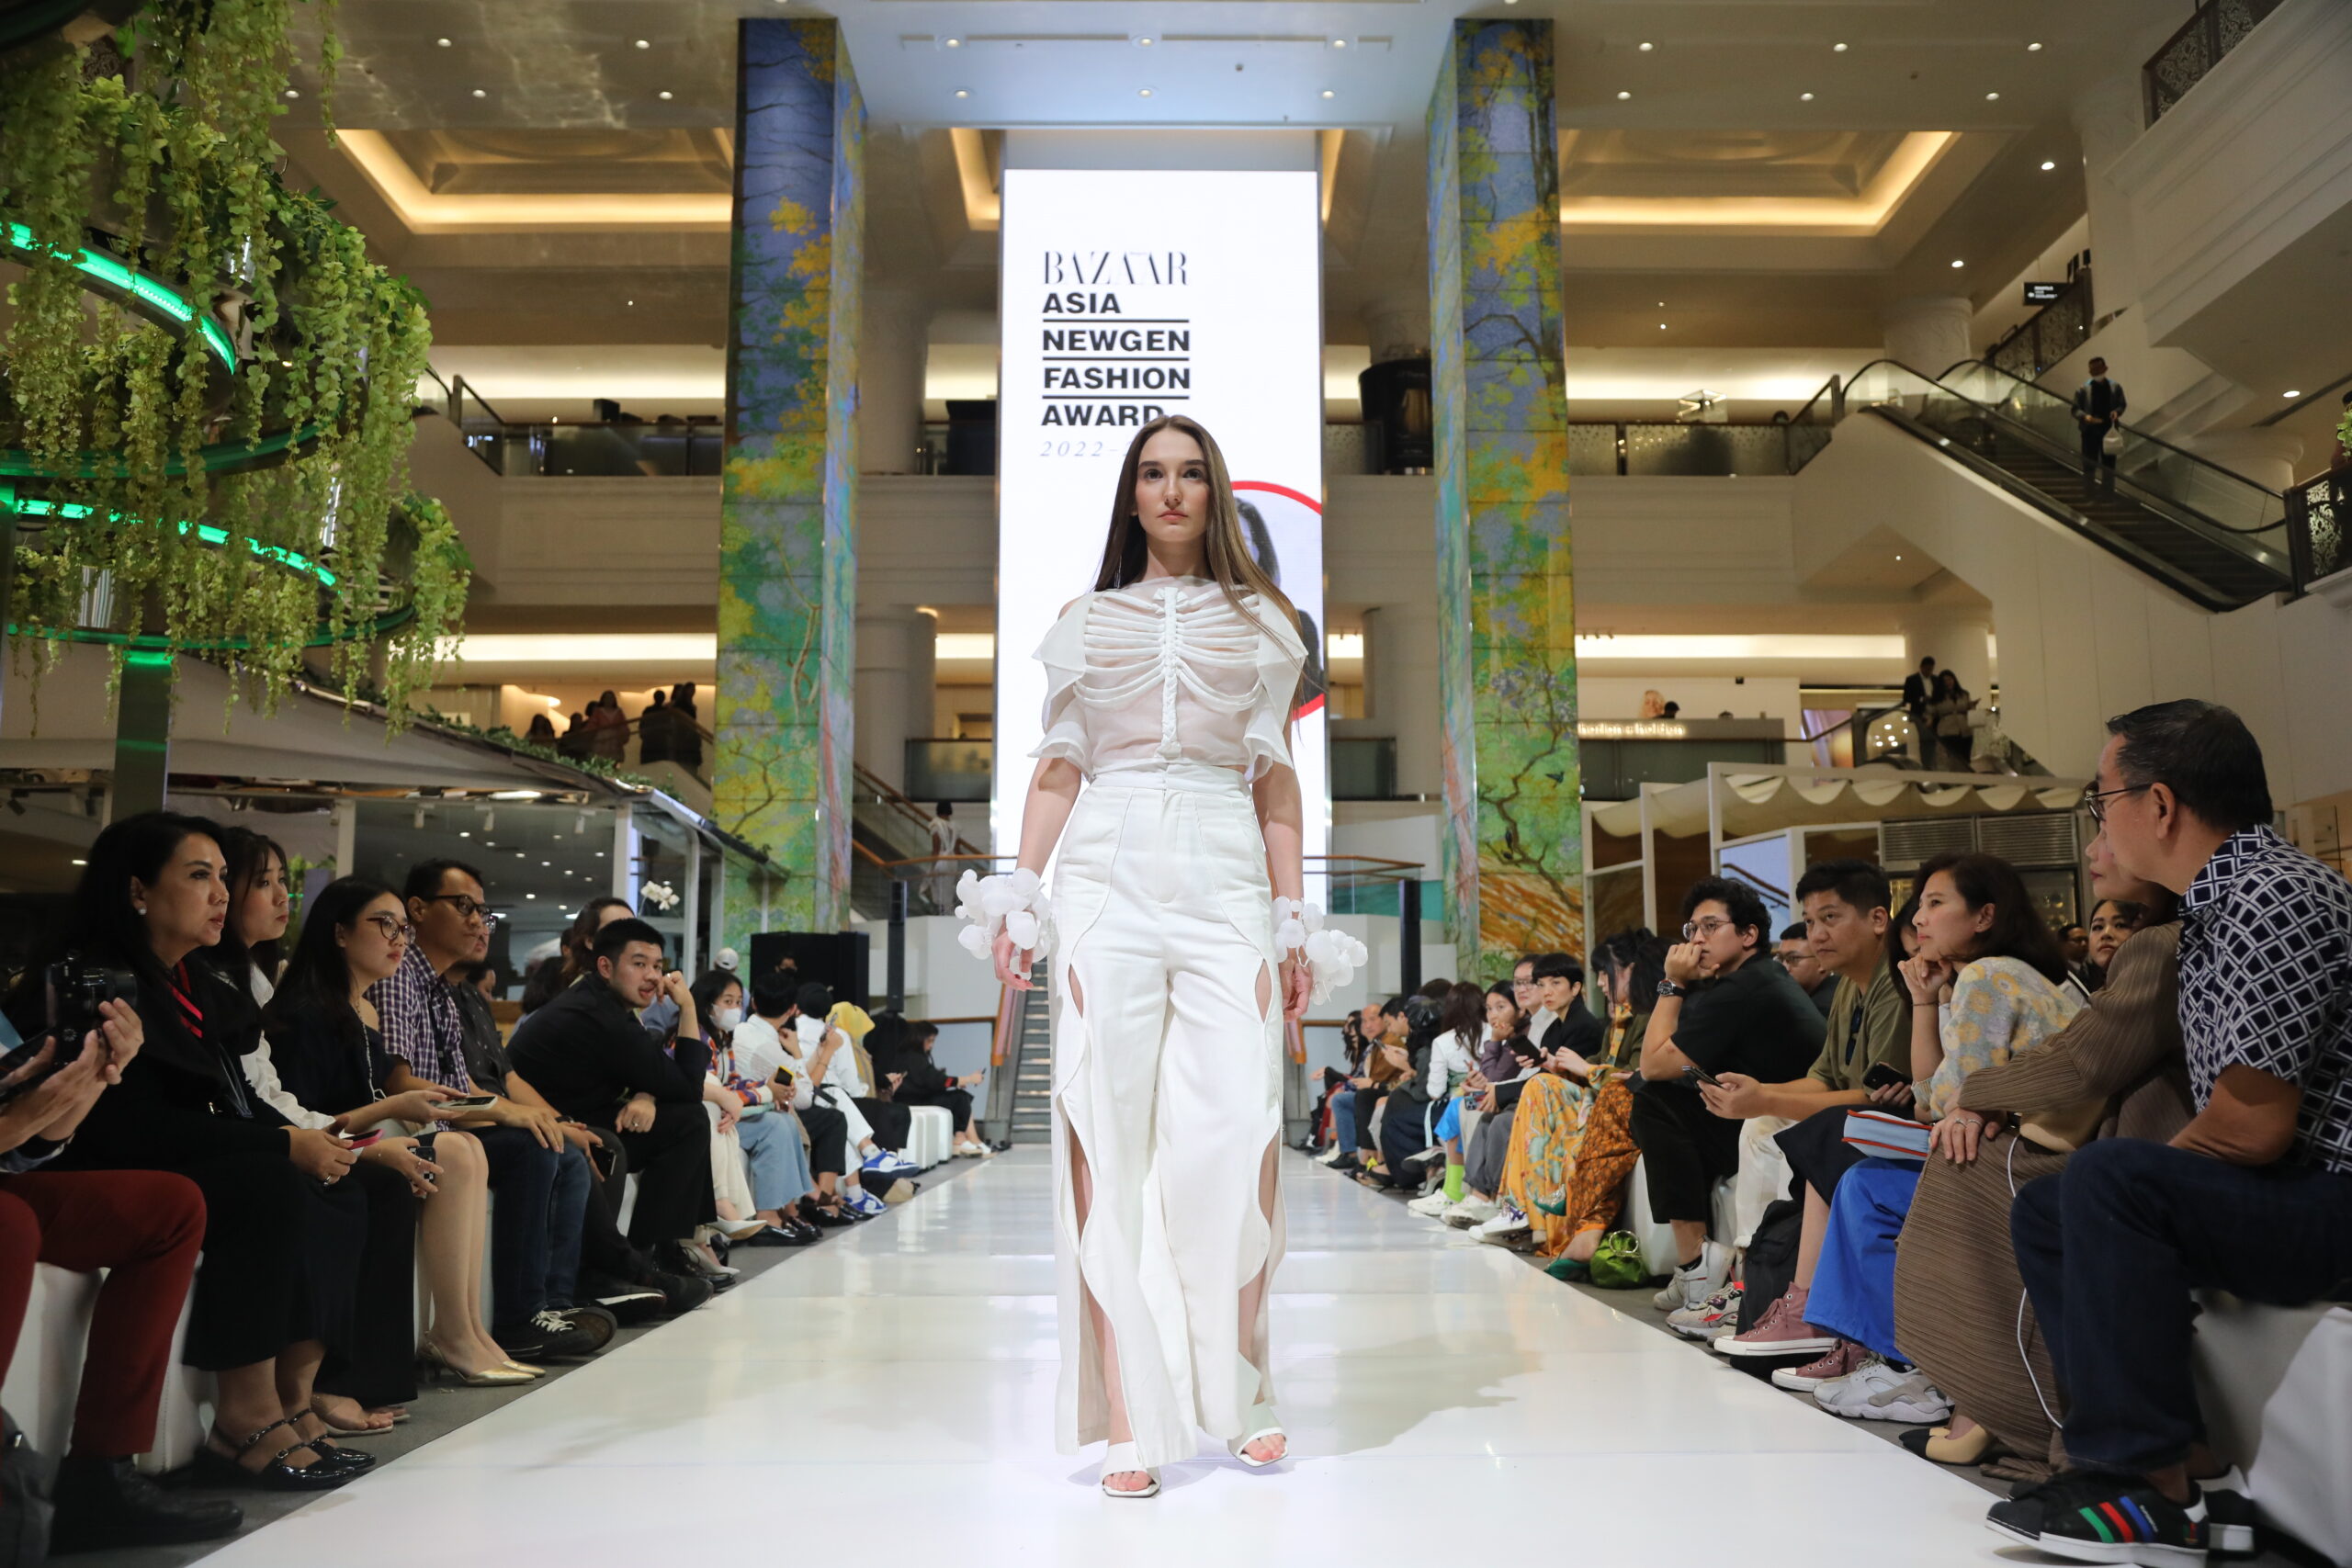 Harper’s BAZAAR Indonesia Asia Newgen Fashion Award 2023 Kembali Hadir!